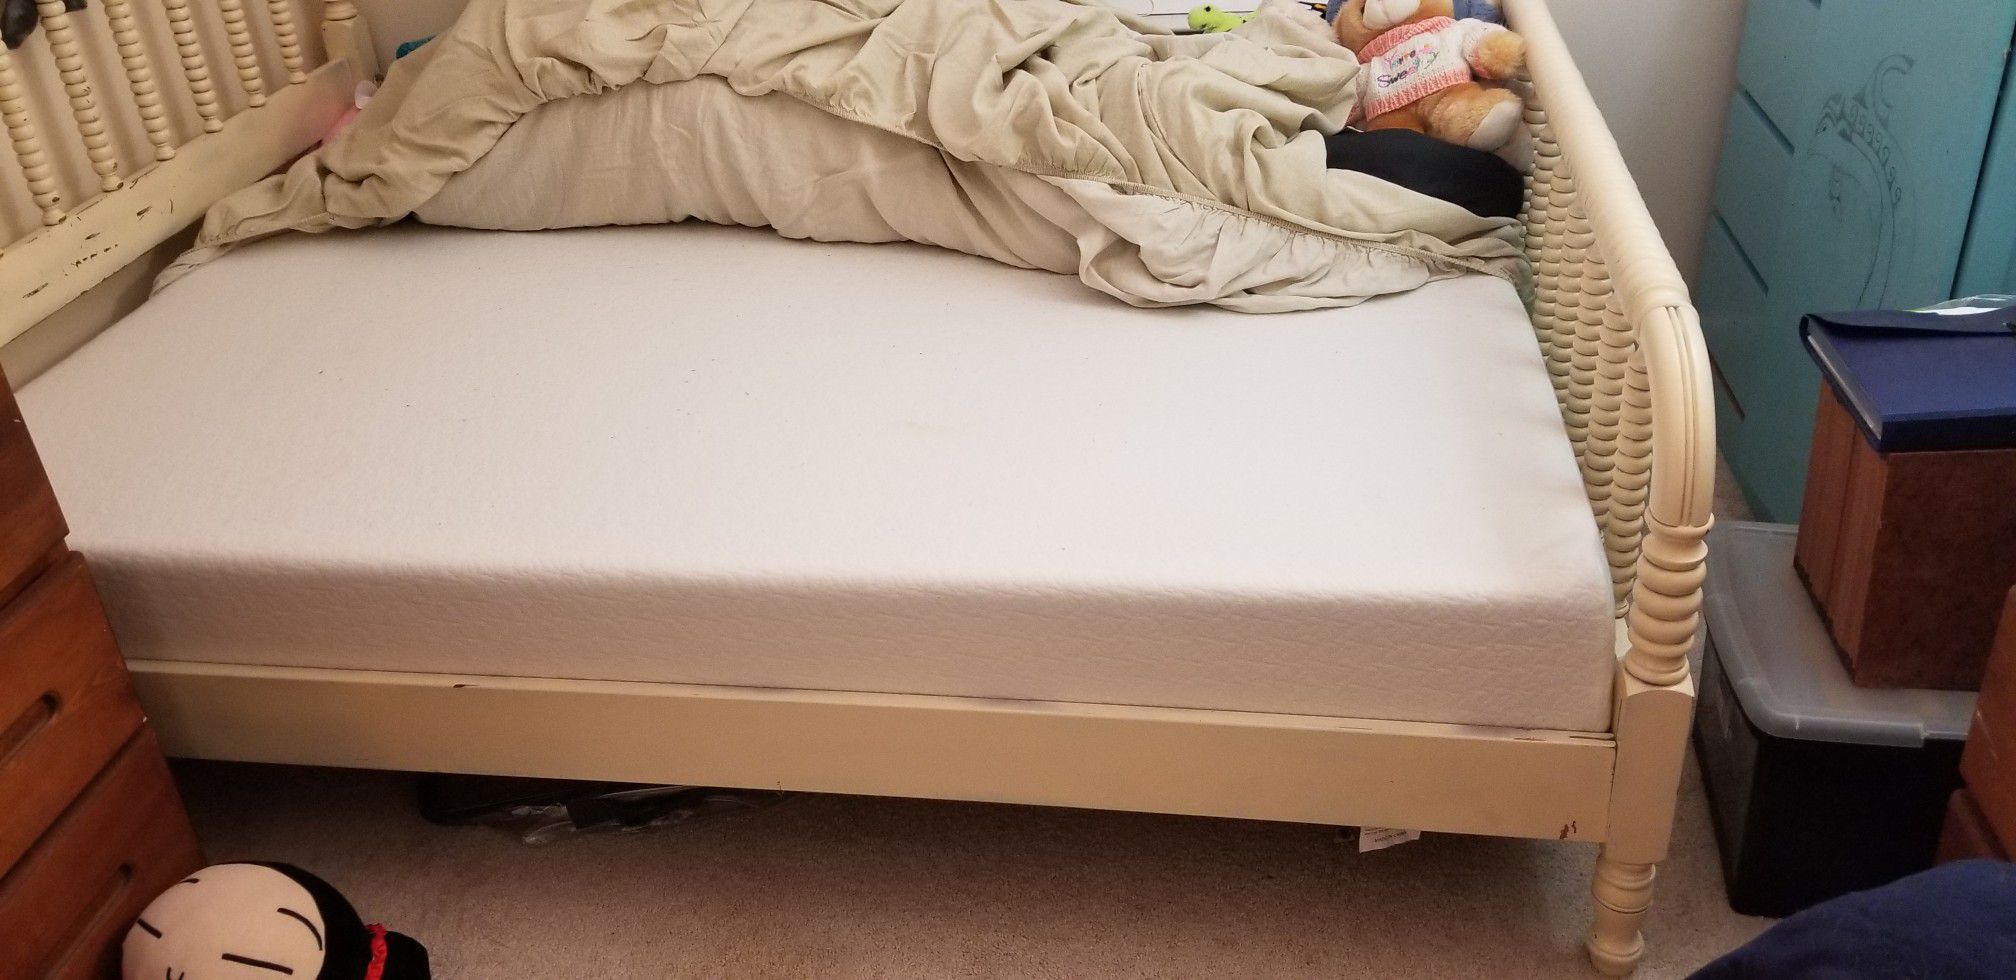 Tempurpedic mattress and bed frame